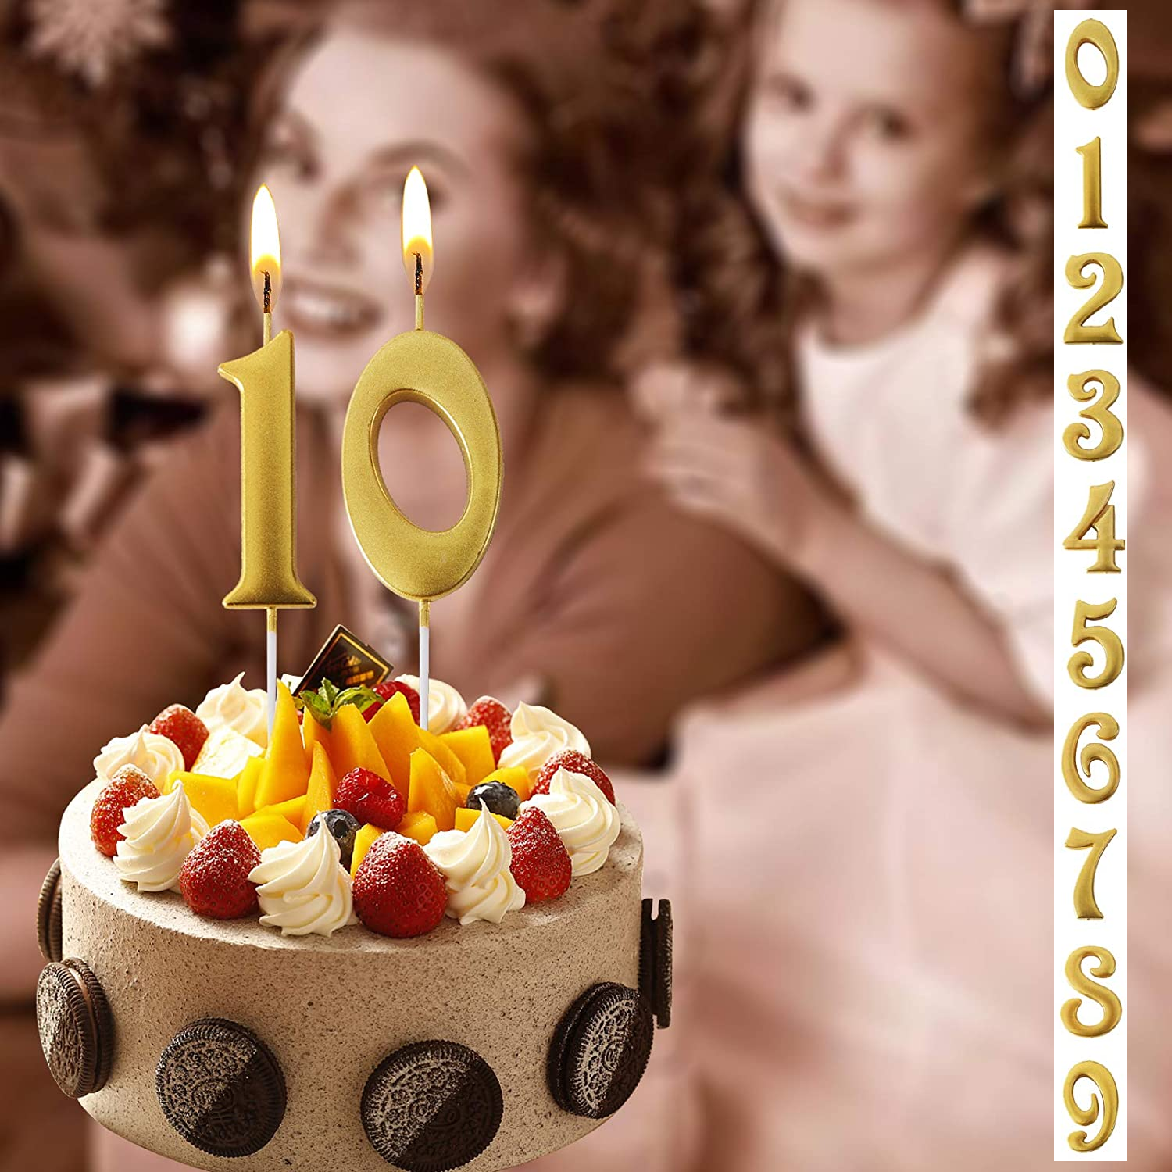 Cake/Cupcake Candle - 'Ornate' gold candle - # 3 - Rampant Coffee Company